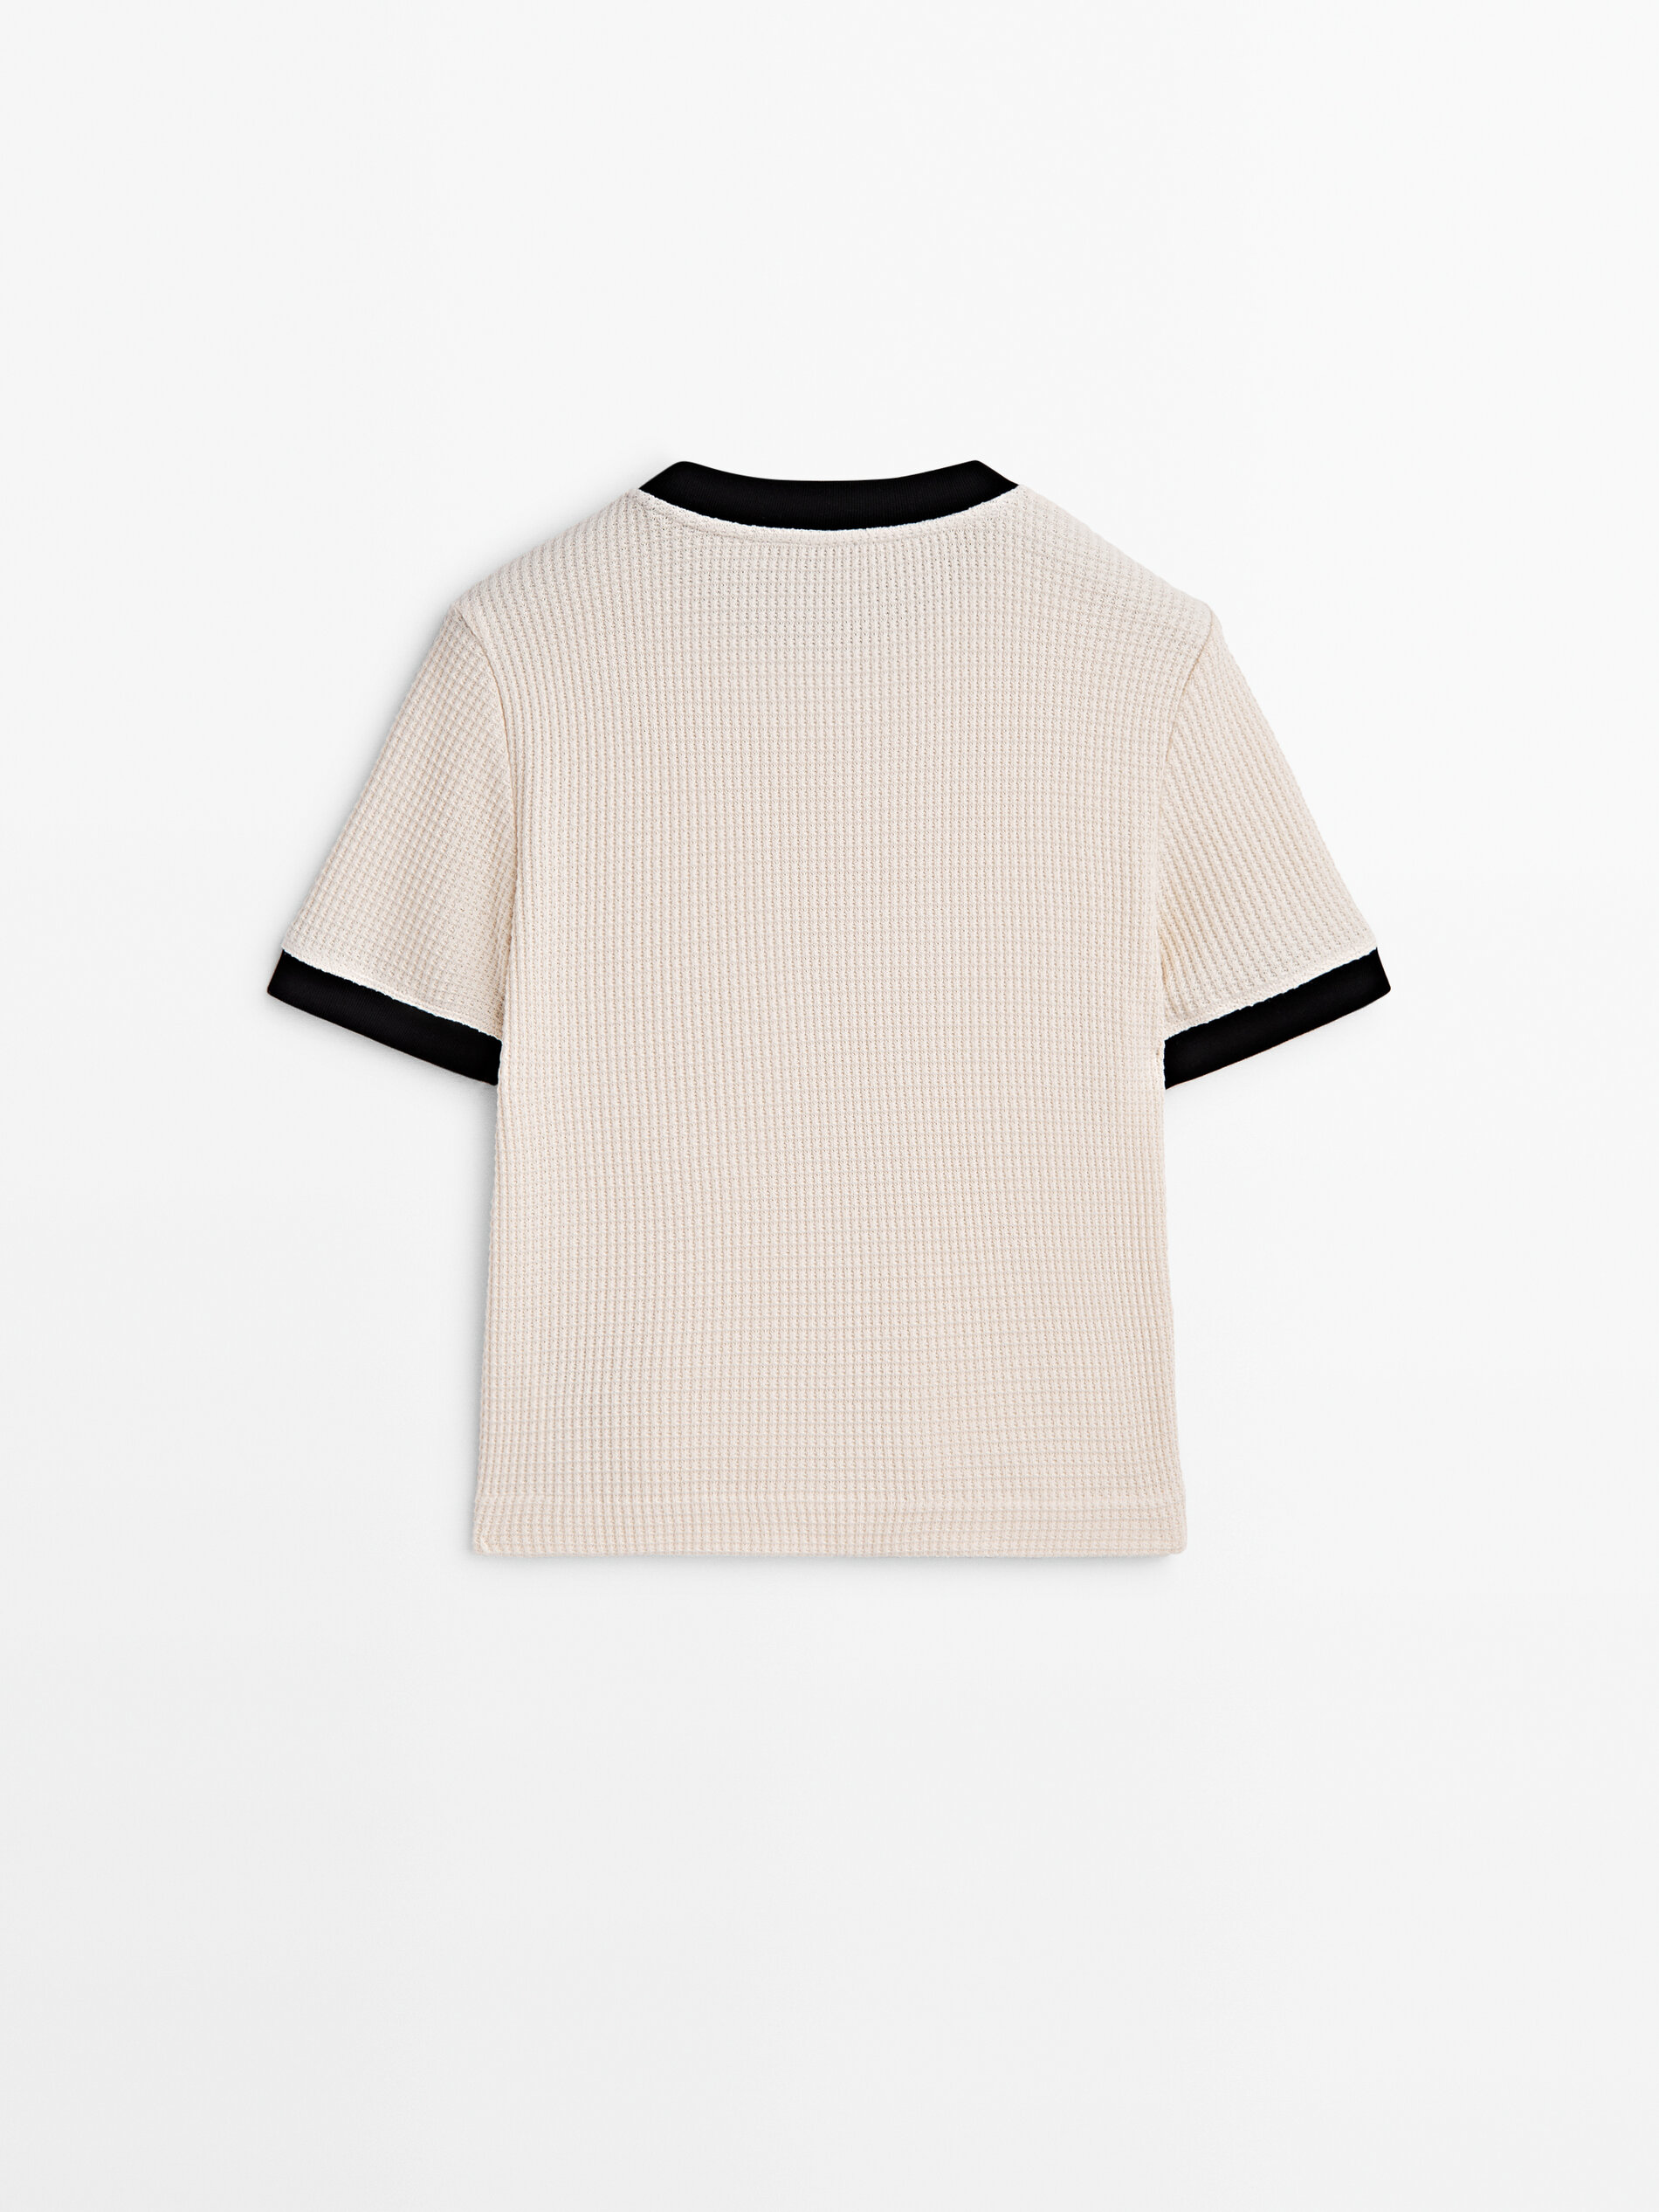 Contrast textured cotton T-shirt